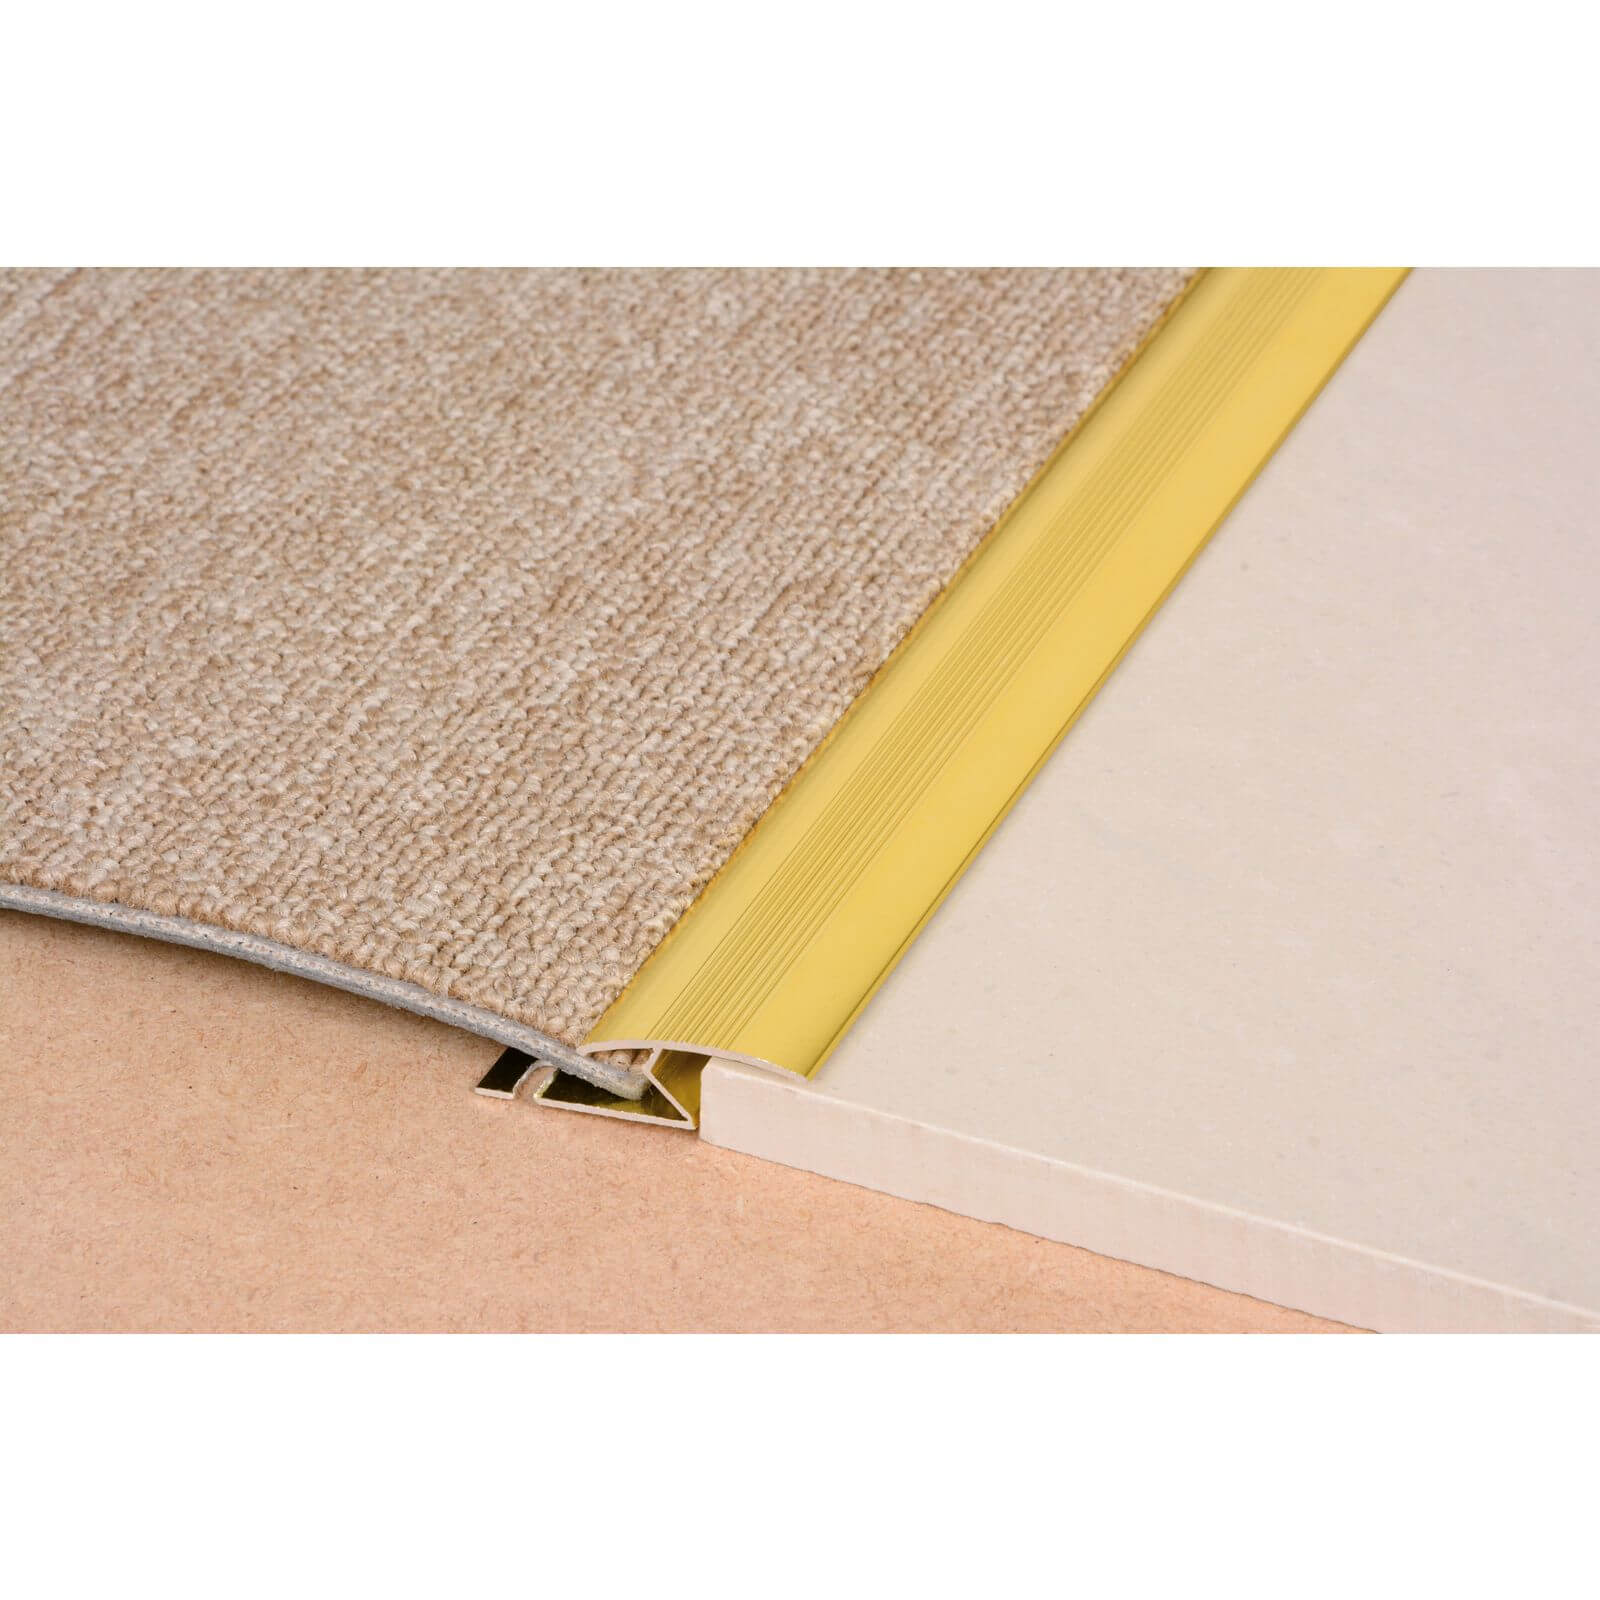 Photo of Vitrex Cover Strip - Carpet To Ceramic - Gold - 0.9m